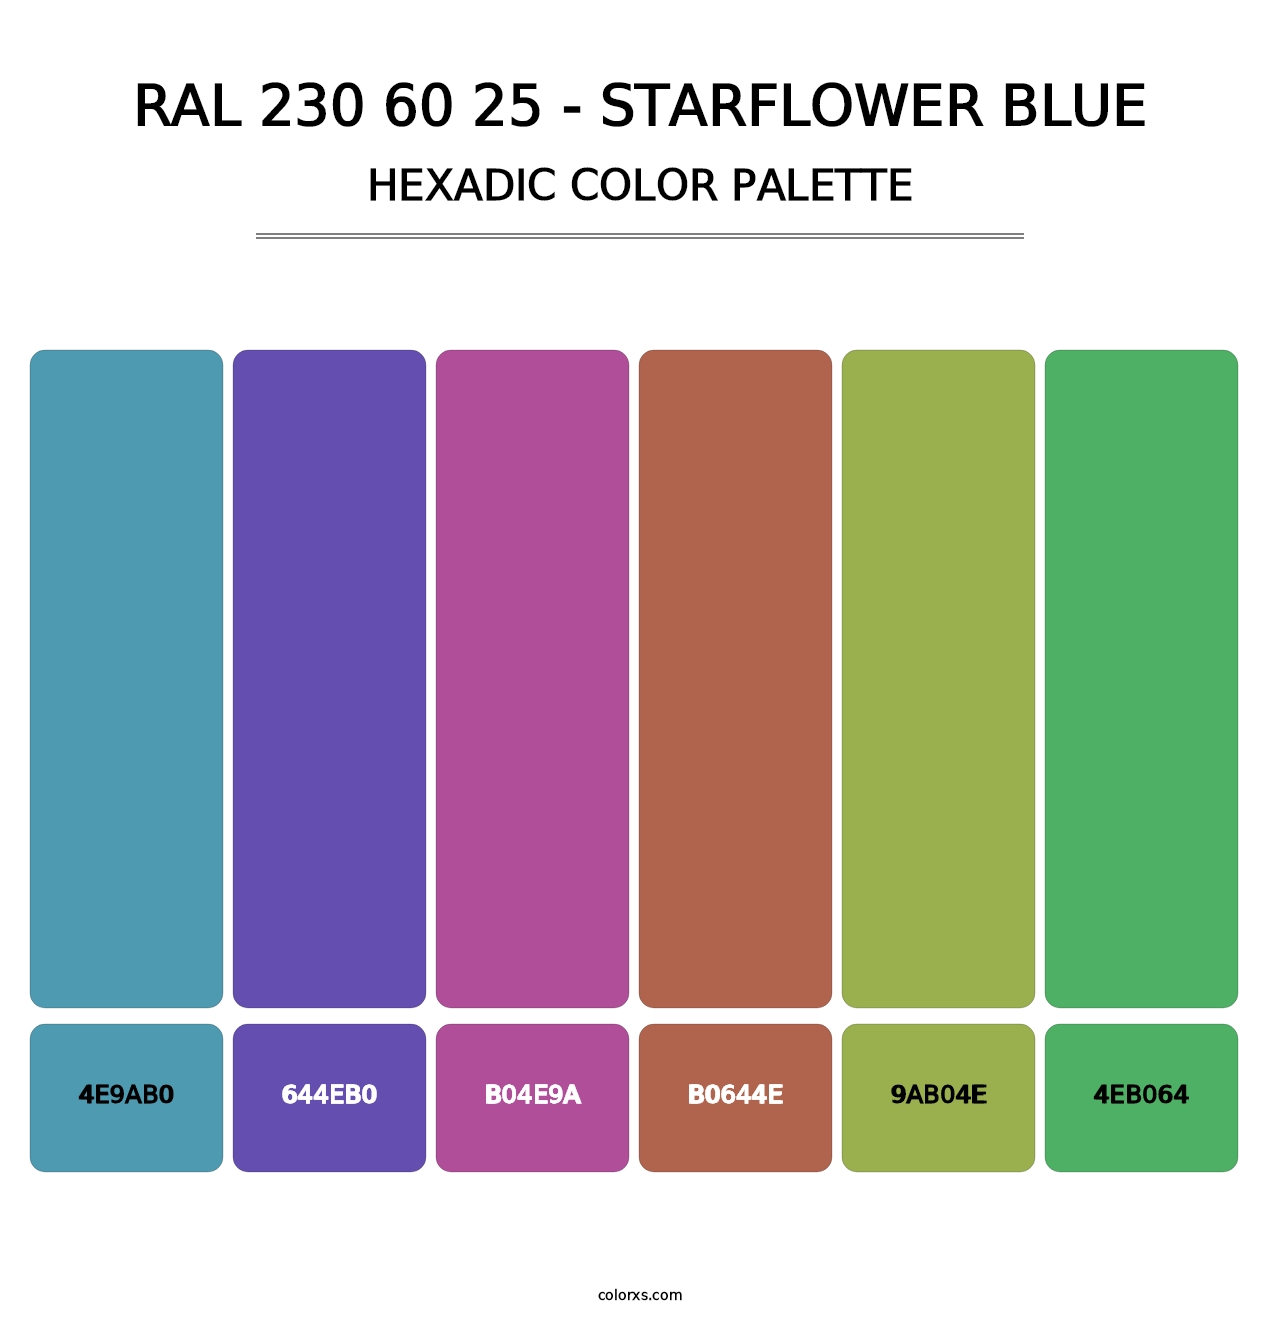 RAL 230 60 25 - Starflower Blue - Hexadic Color Palette